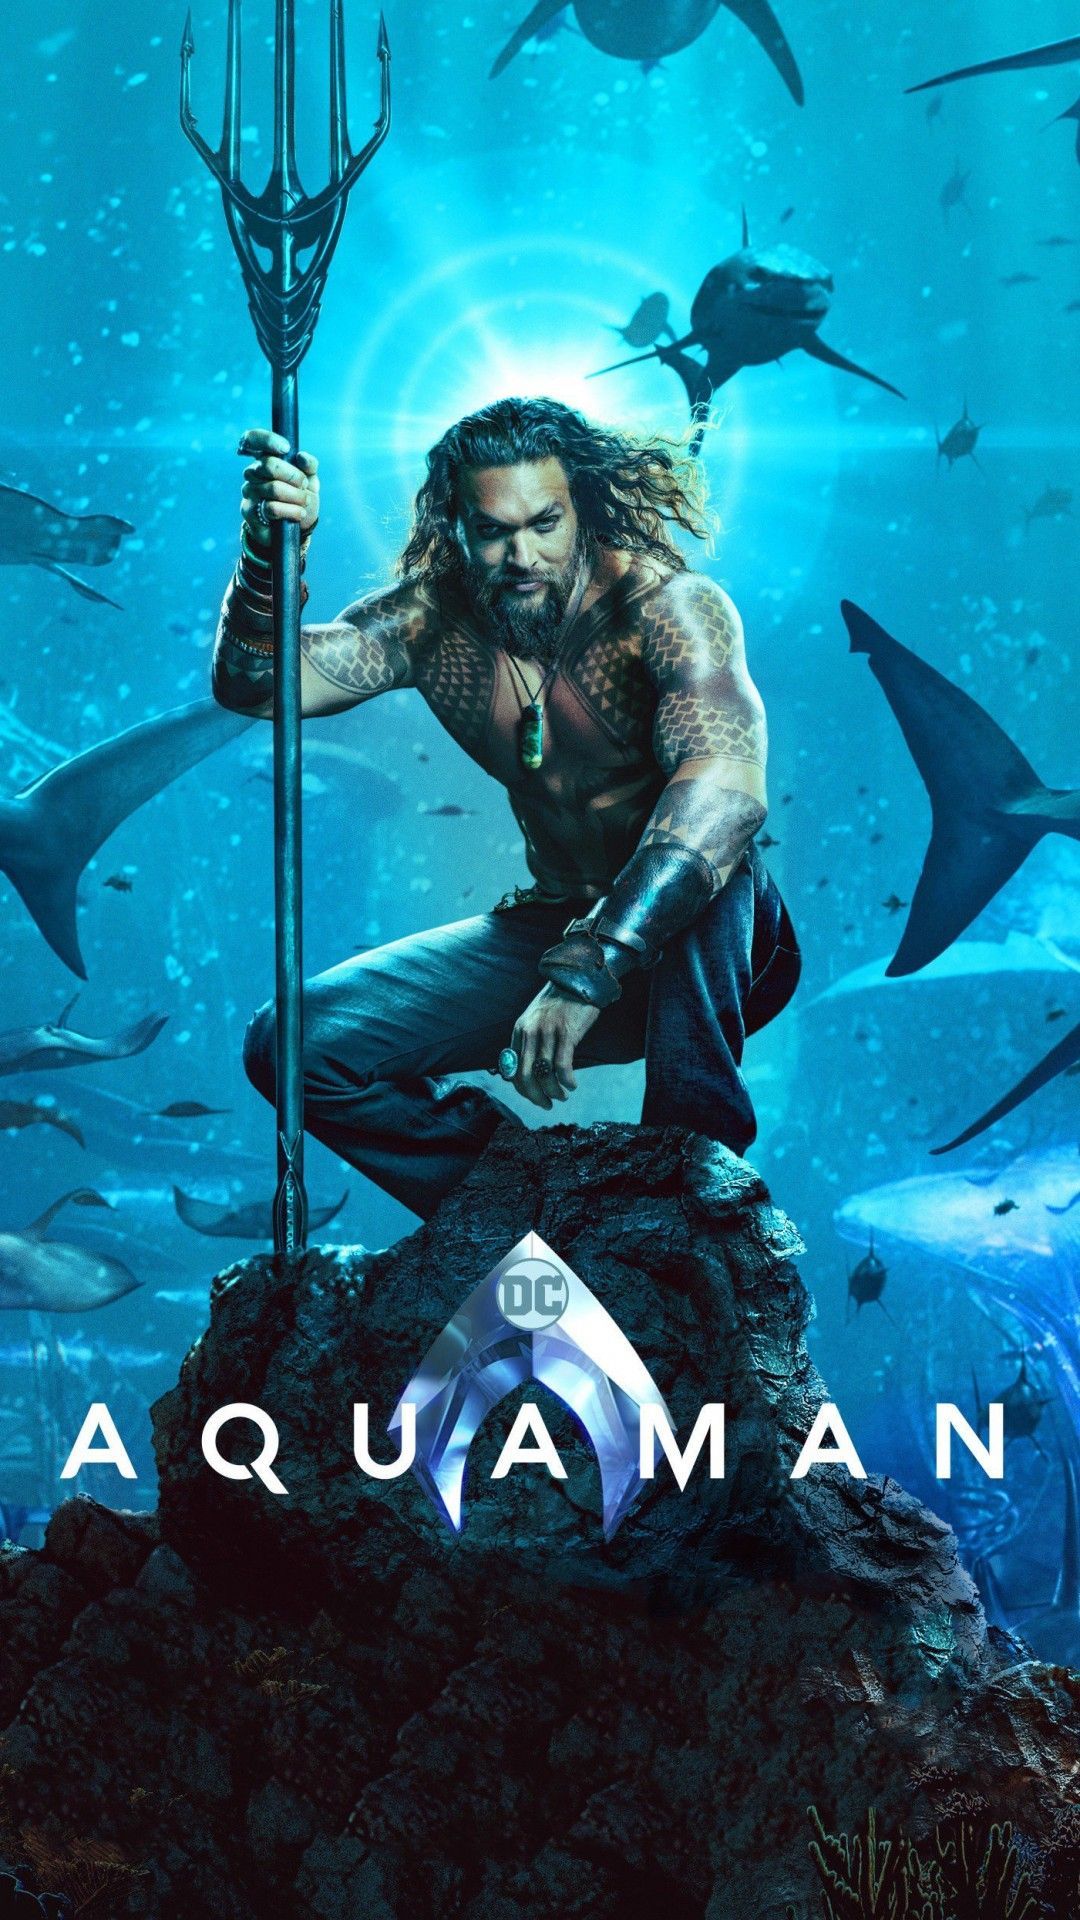 Aquaman Movie Photo Wallpaper for Desktop and Mobile. Aquaman